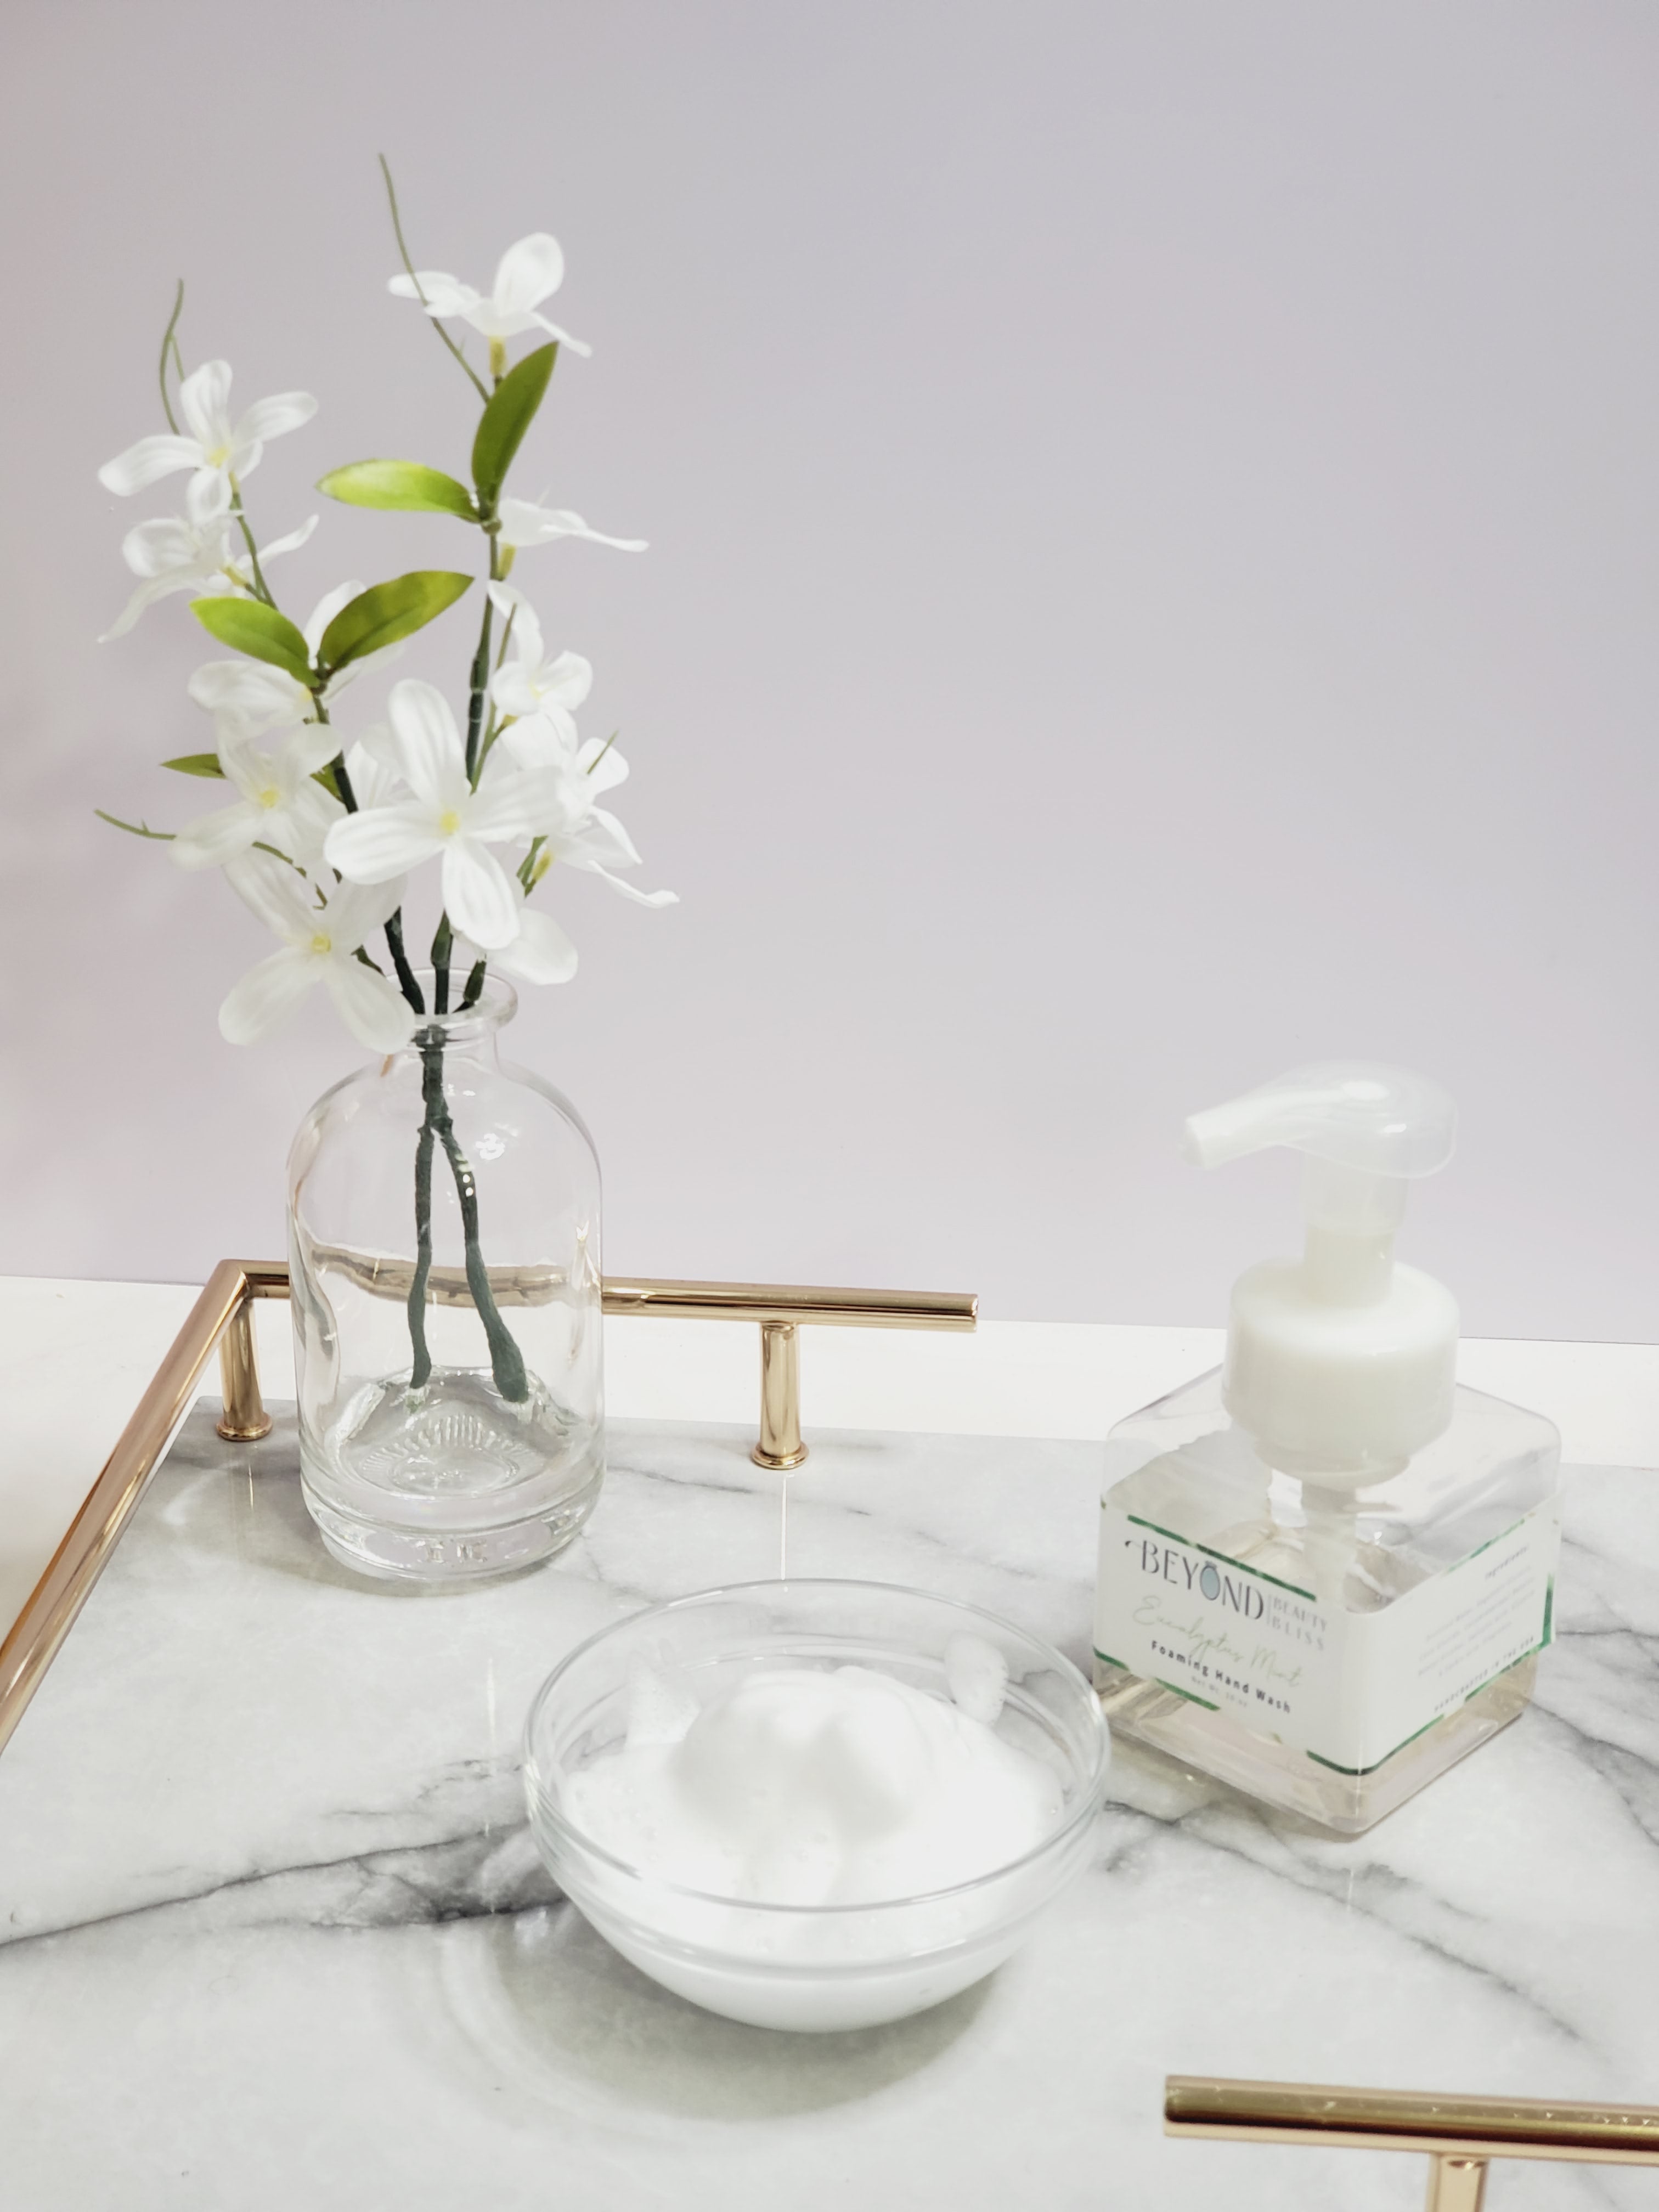 Eucalyptus Mint Hand Wash | Hand Wash | Beyond Beauty Bliss LLC